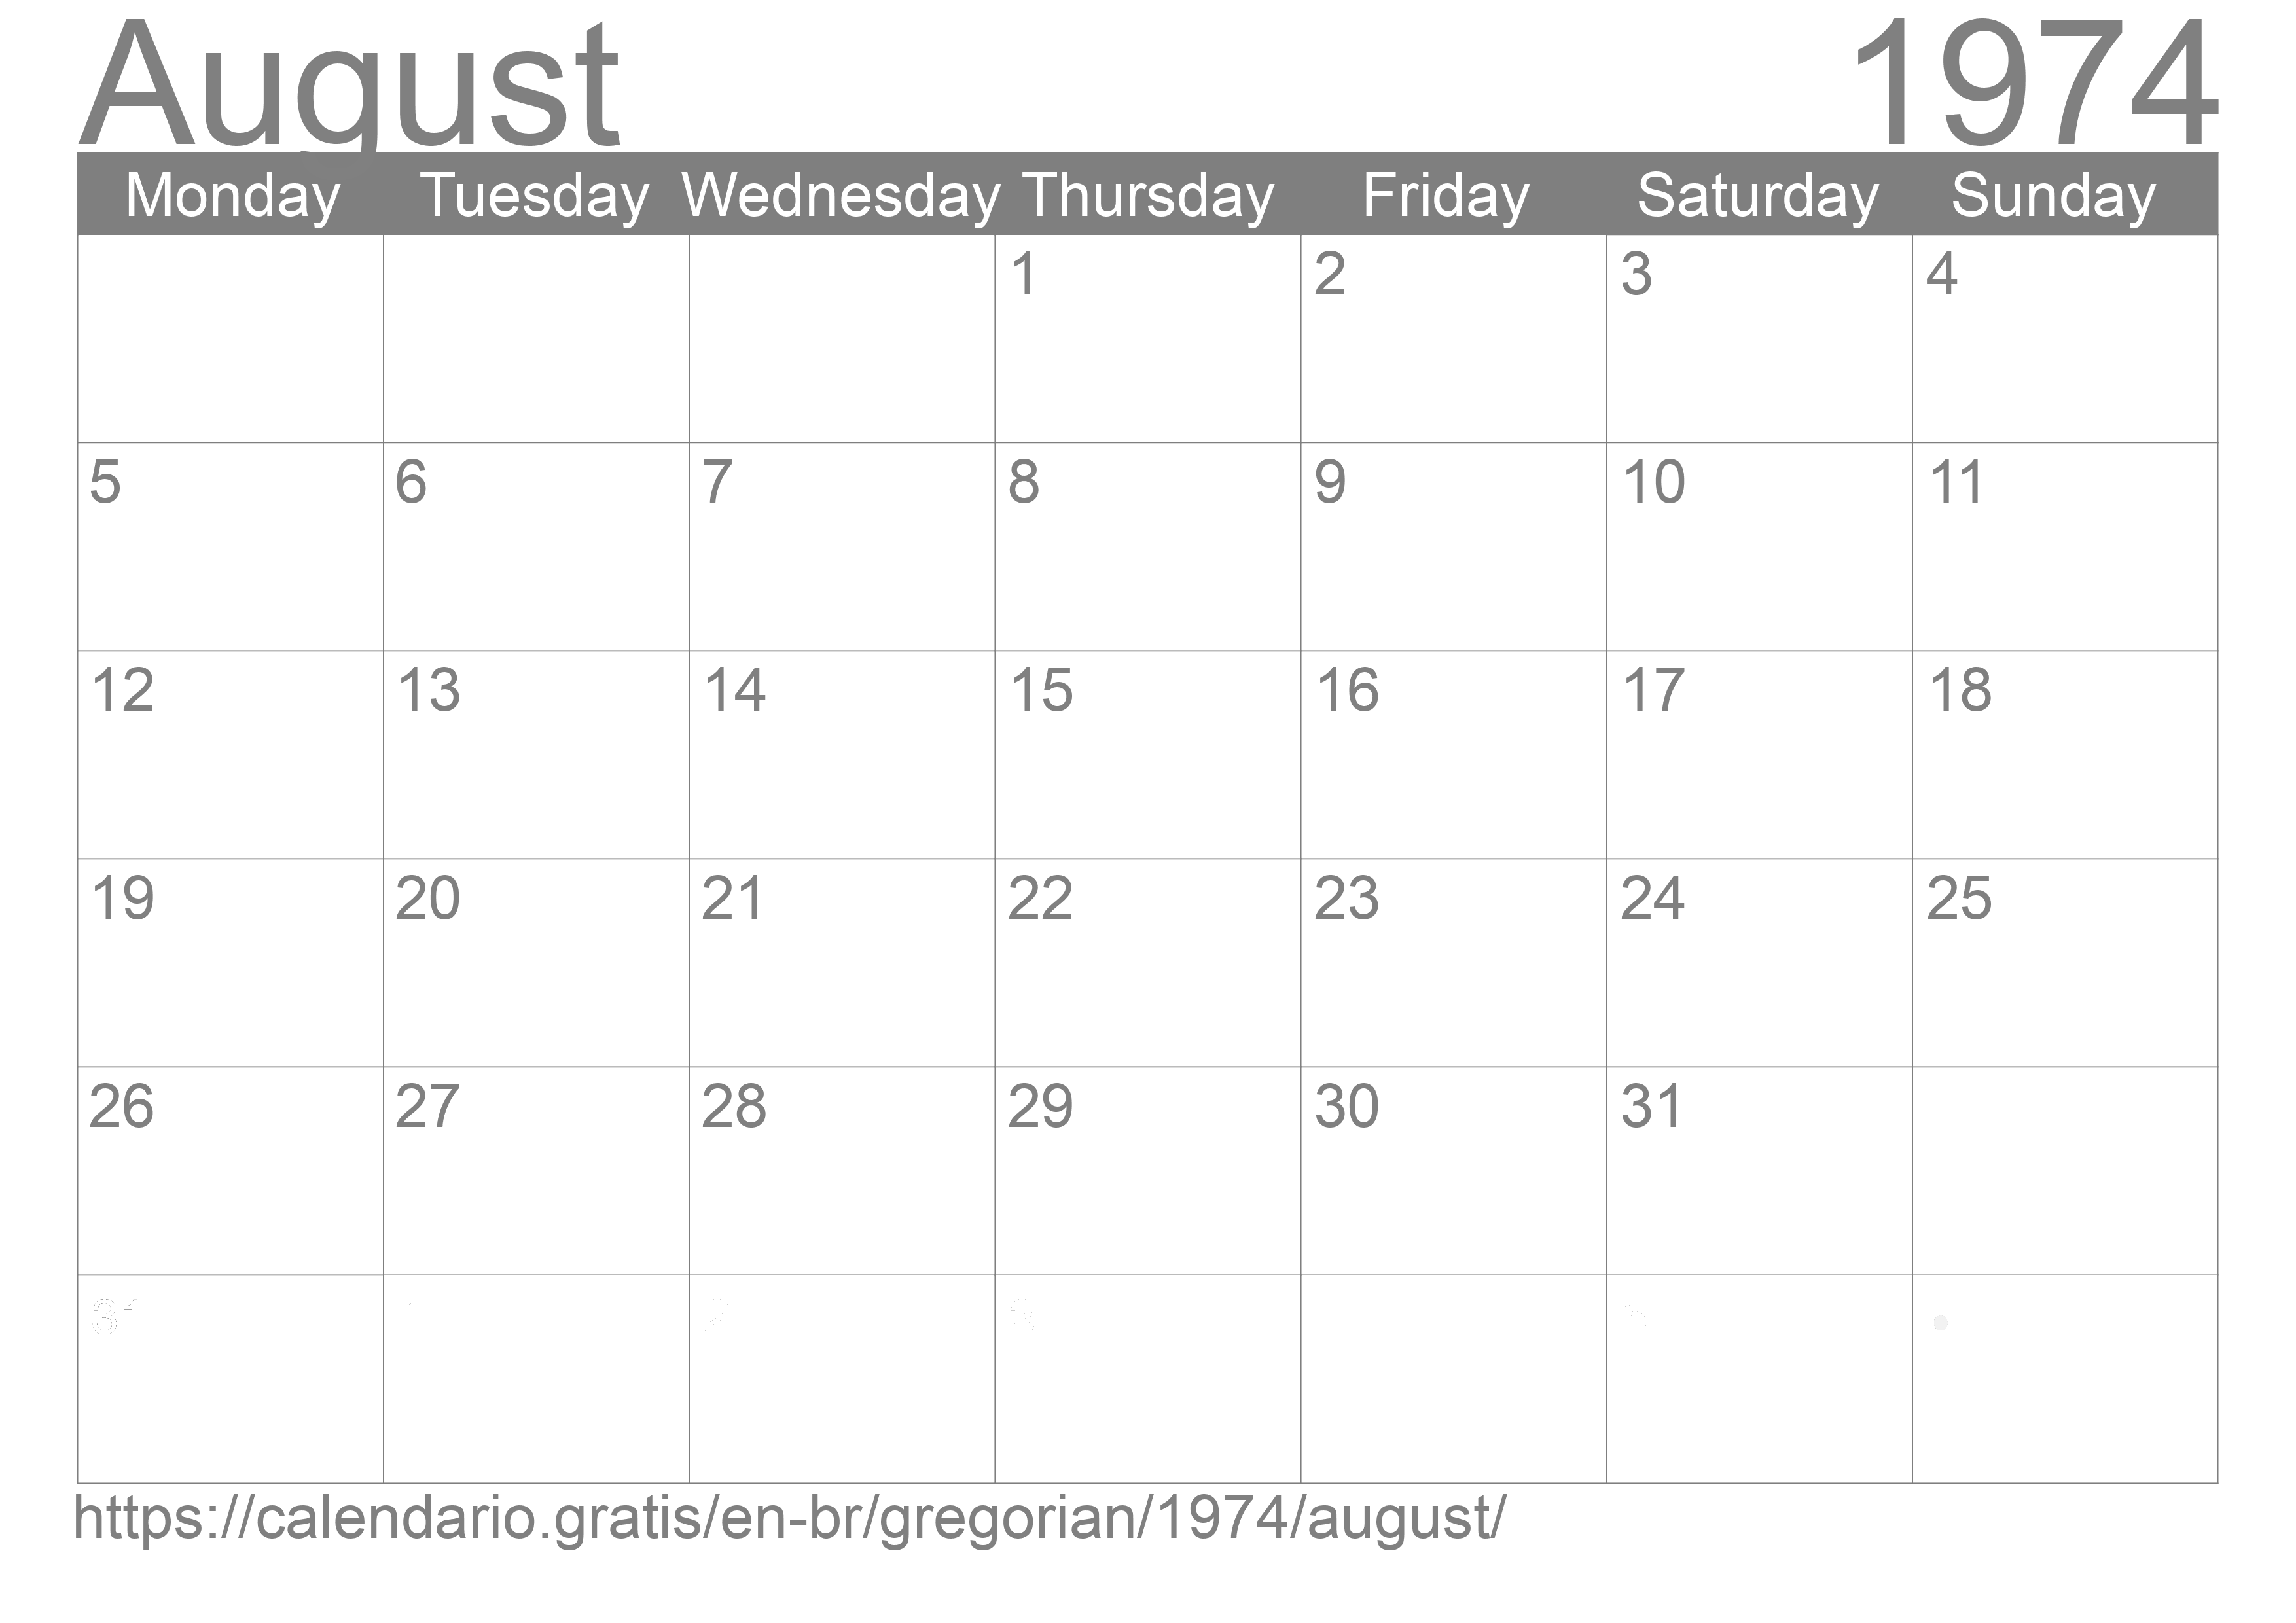 Calendar August 1974 to print